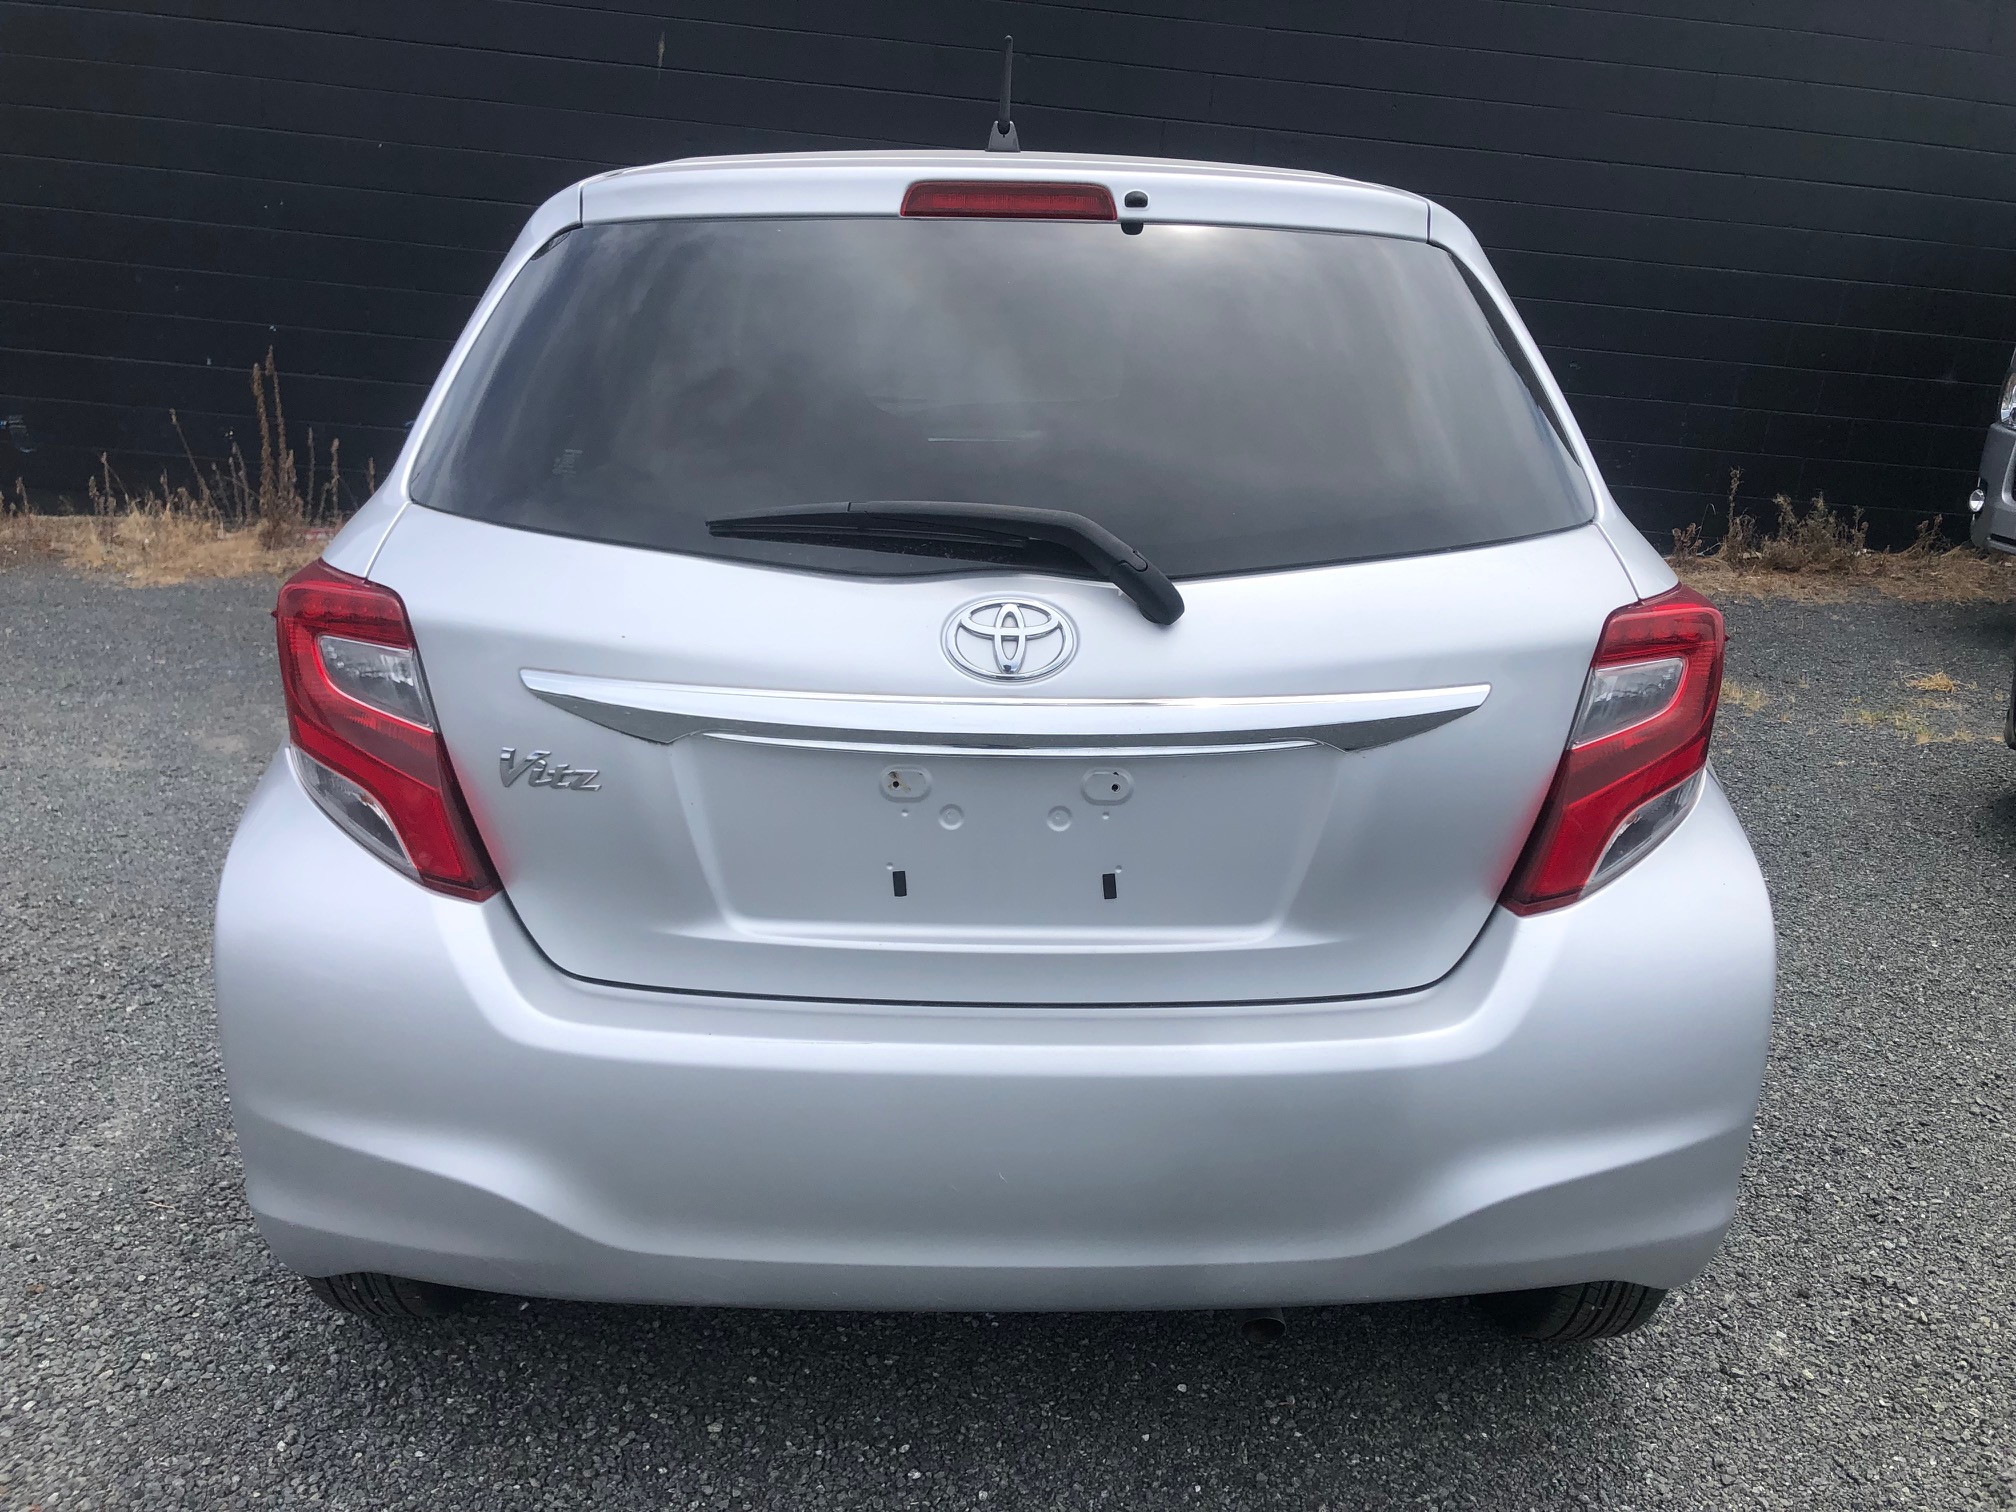 Toyota Vitz 2015 Image 3